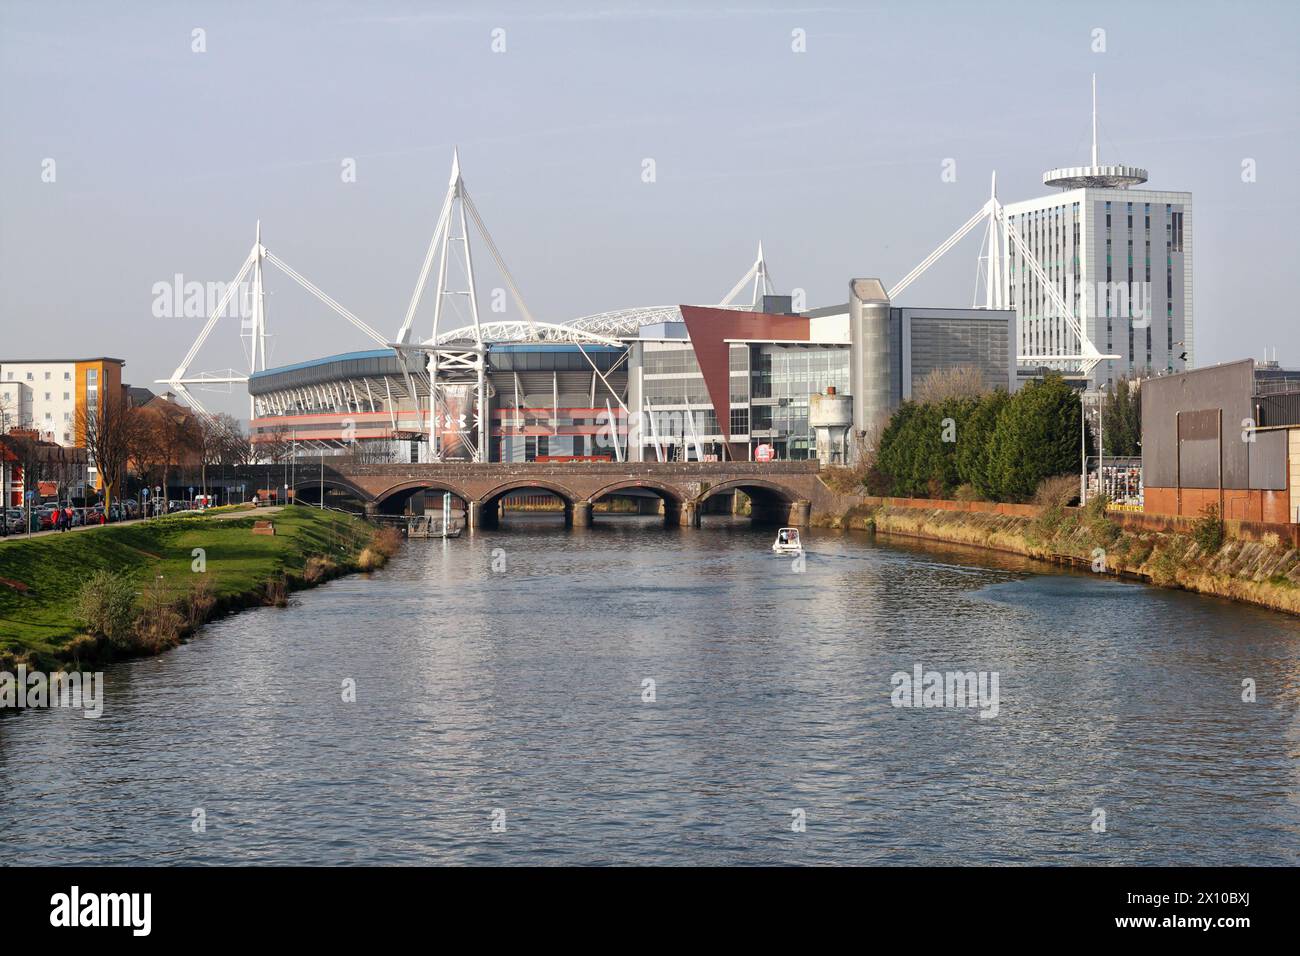 Cardiff Millennium Stadium City Center Skyline, River Taff Wales UK, città urbana capitale gallese Foto Stock